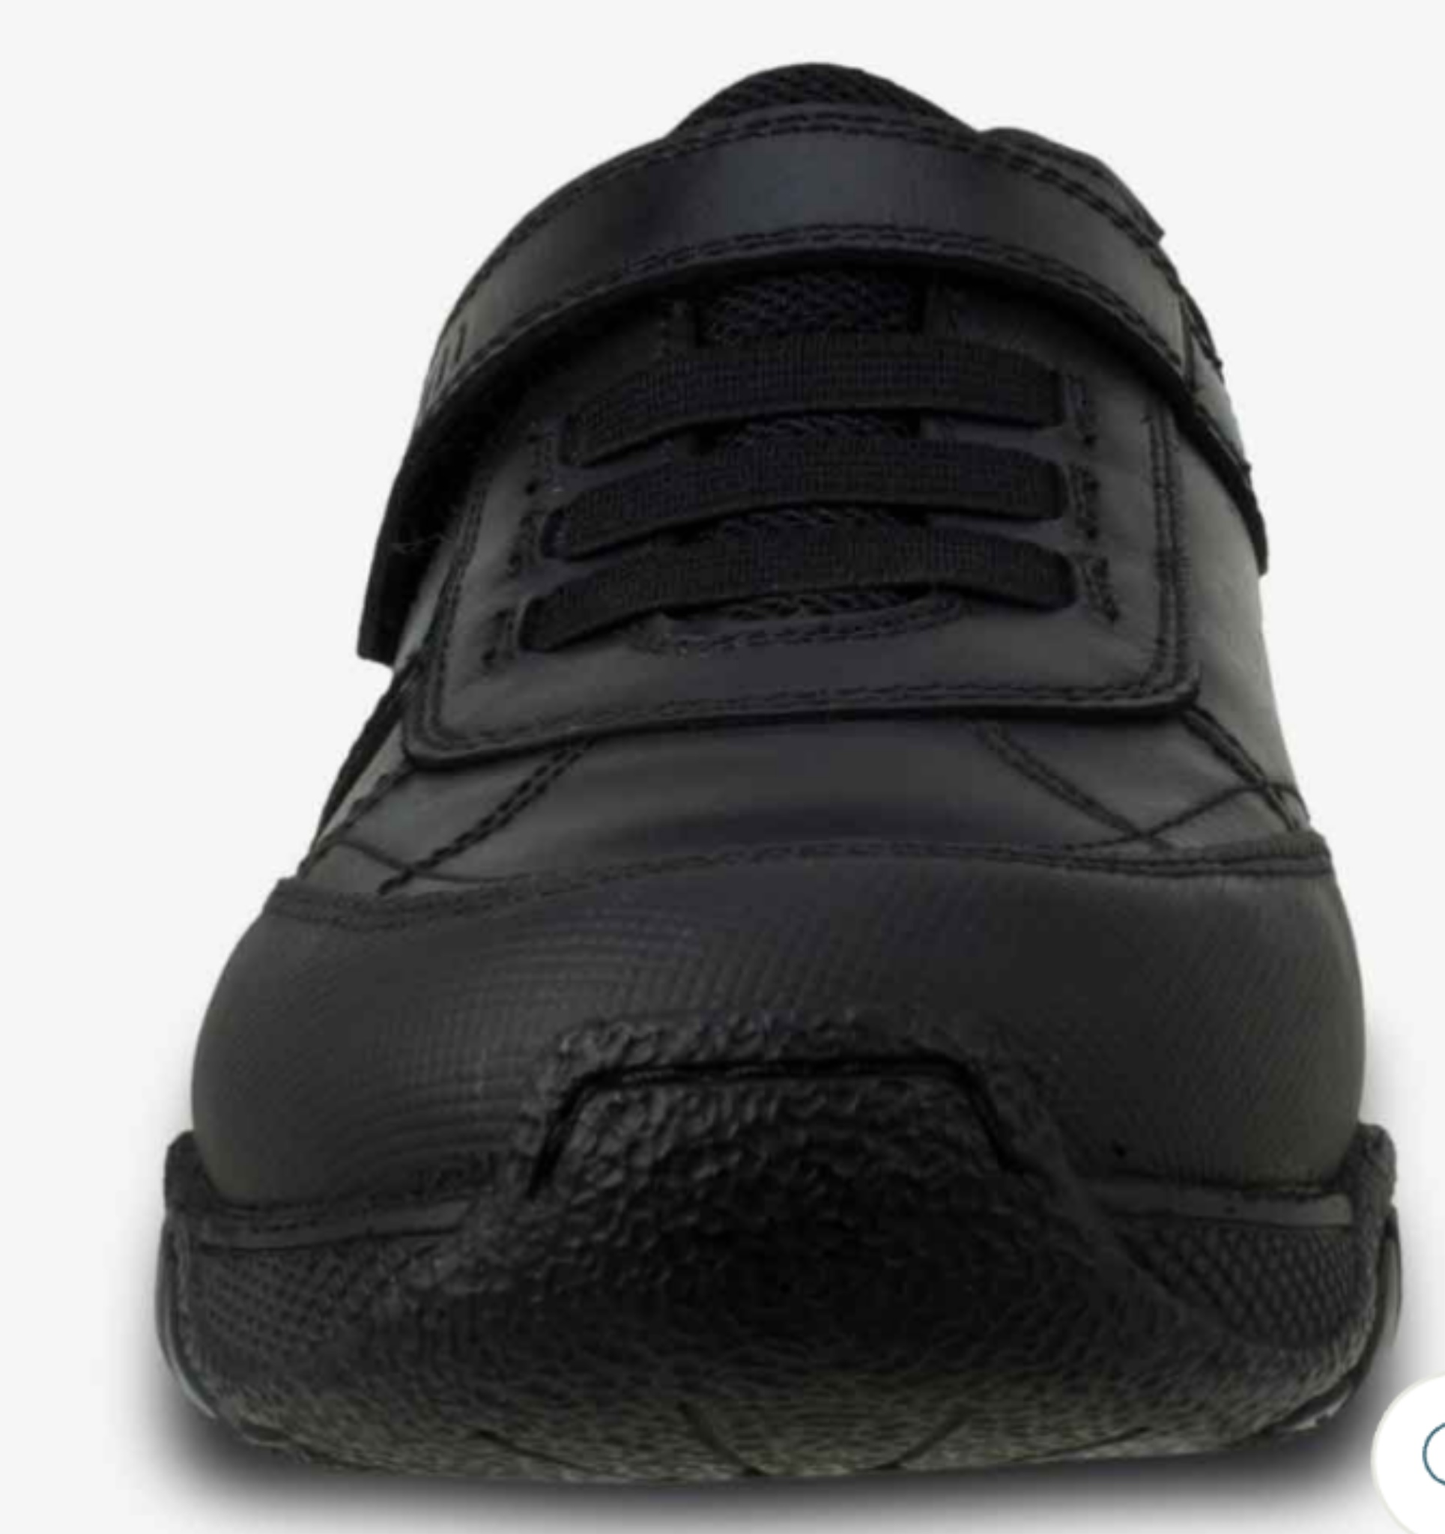 Term Maxx Black School Shoes